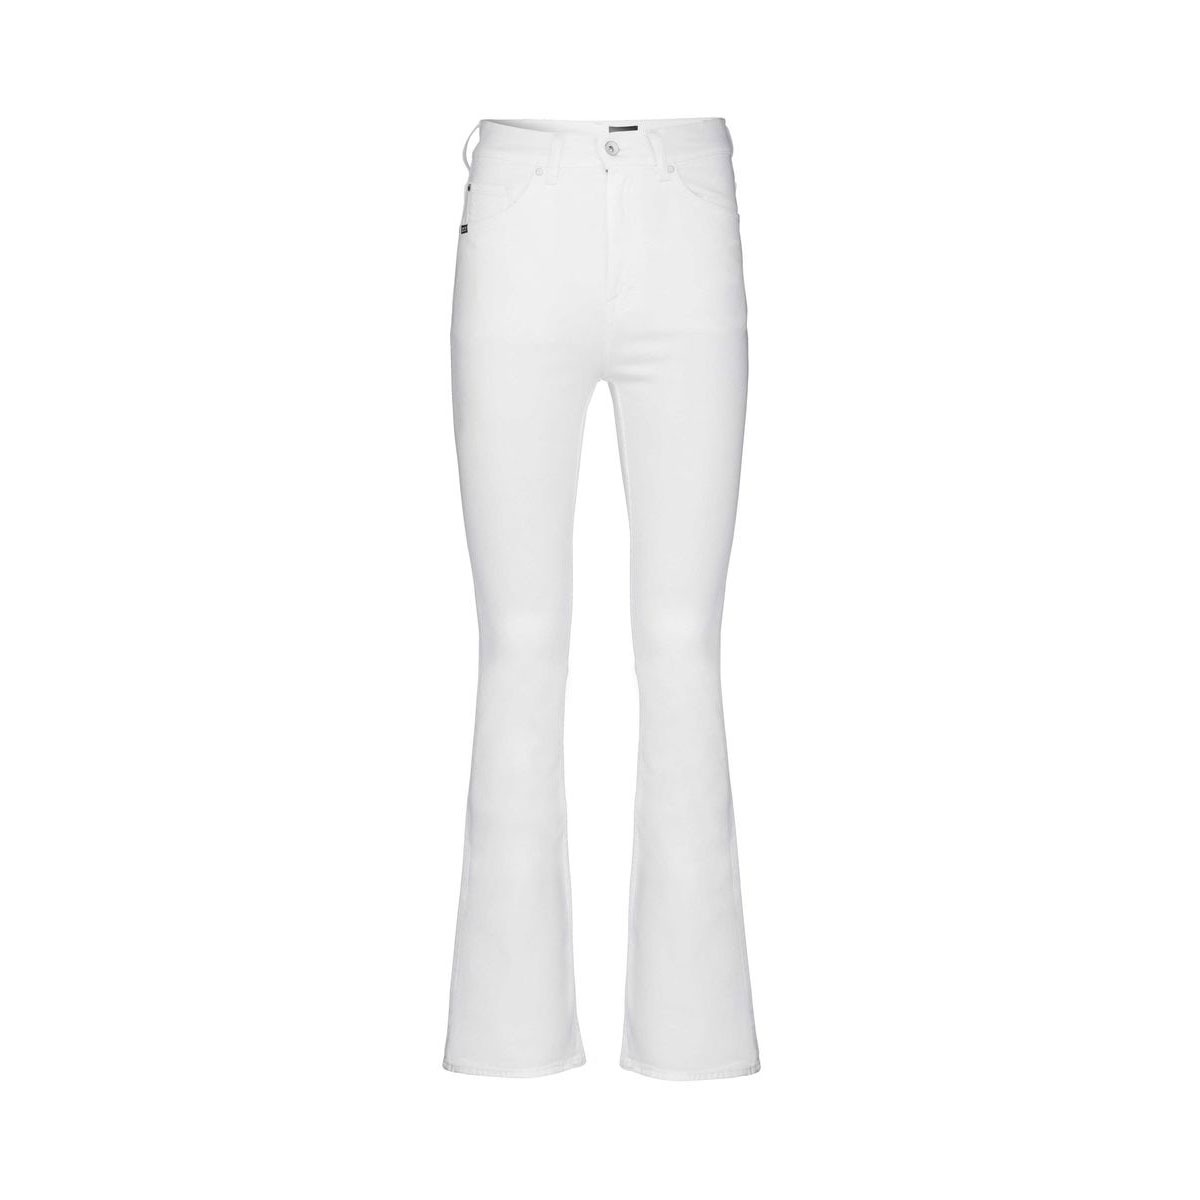 of Sweden Caprice Jeans - FINE LUXURY